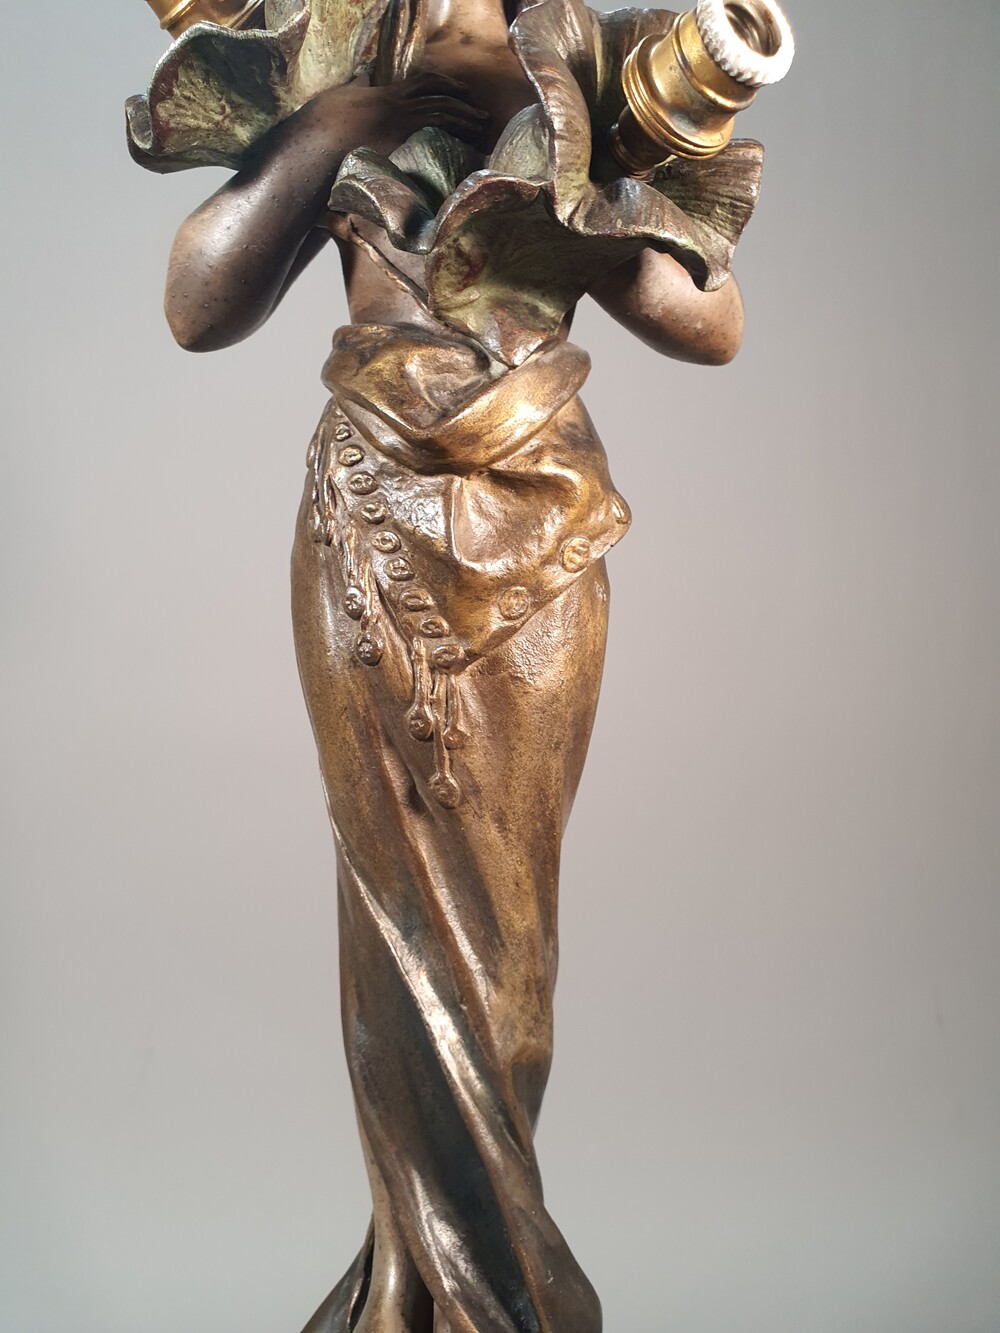 Emmanuel Villanis lamp bronze sculpture